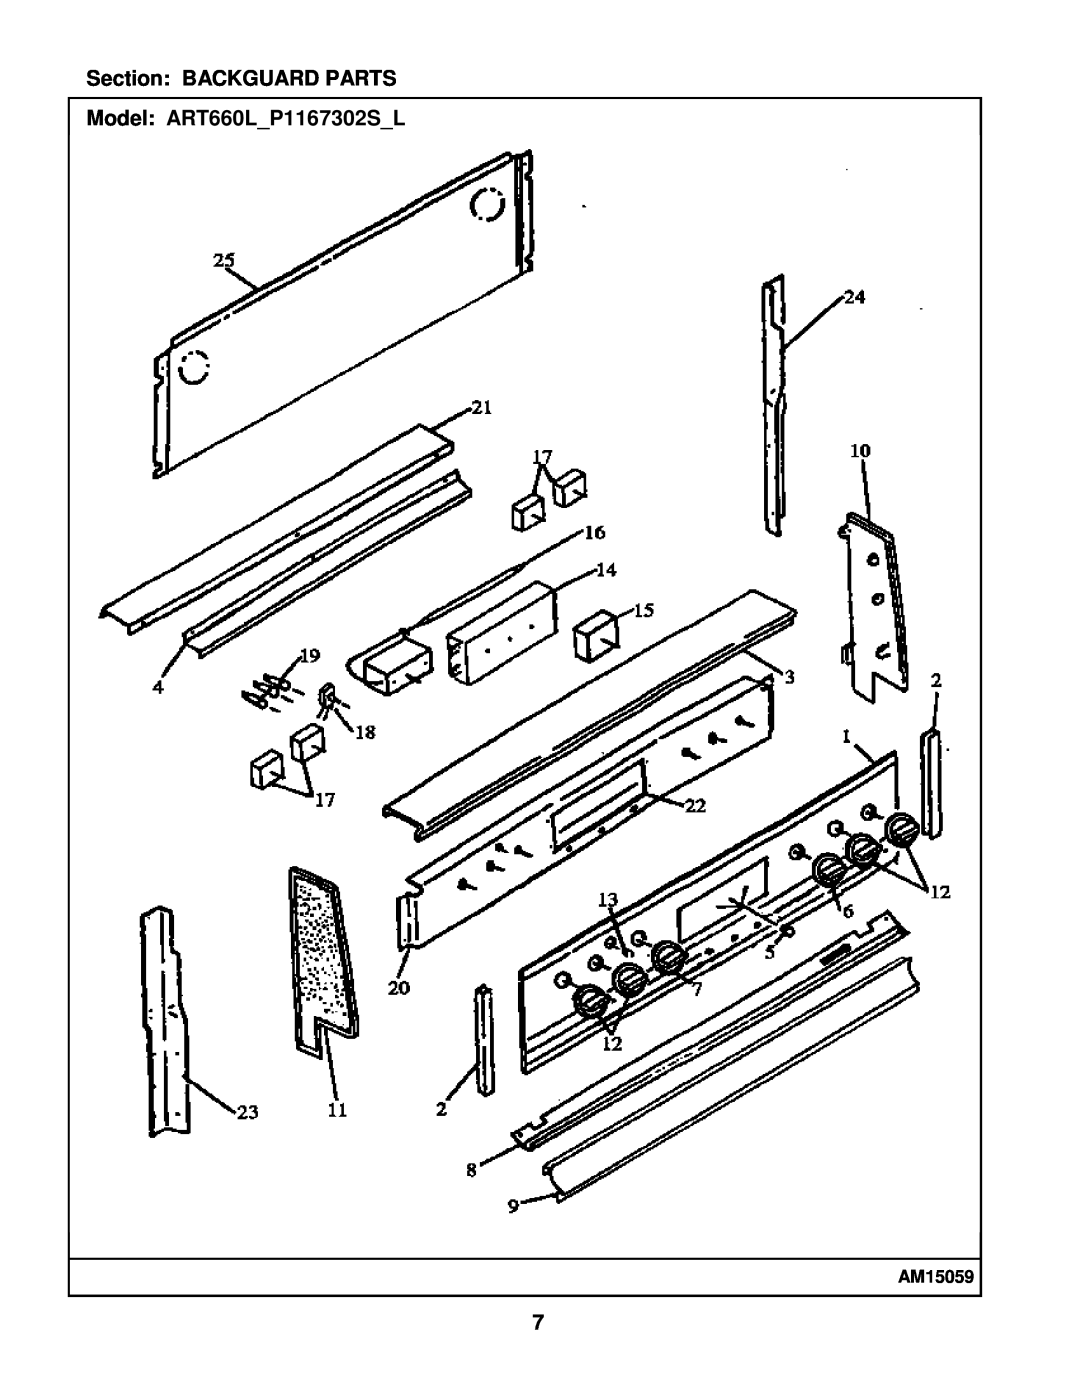 Whirlpool manual Section BACKGUARD PARTS, Model ART660L P1167302S L, AM15059 